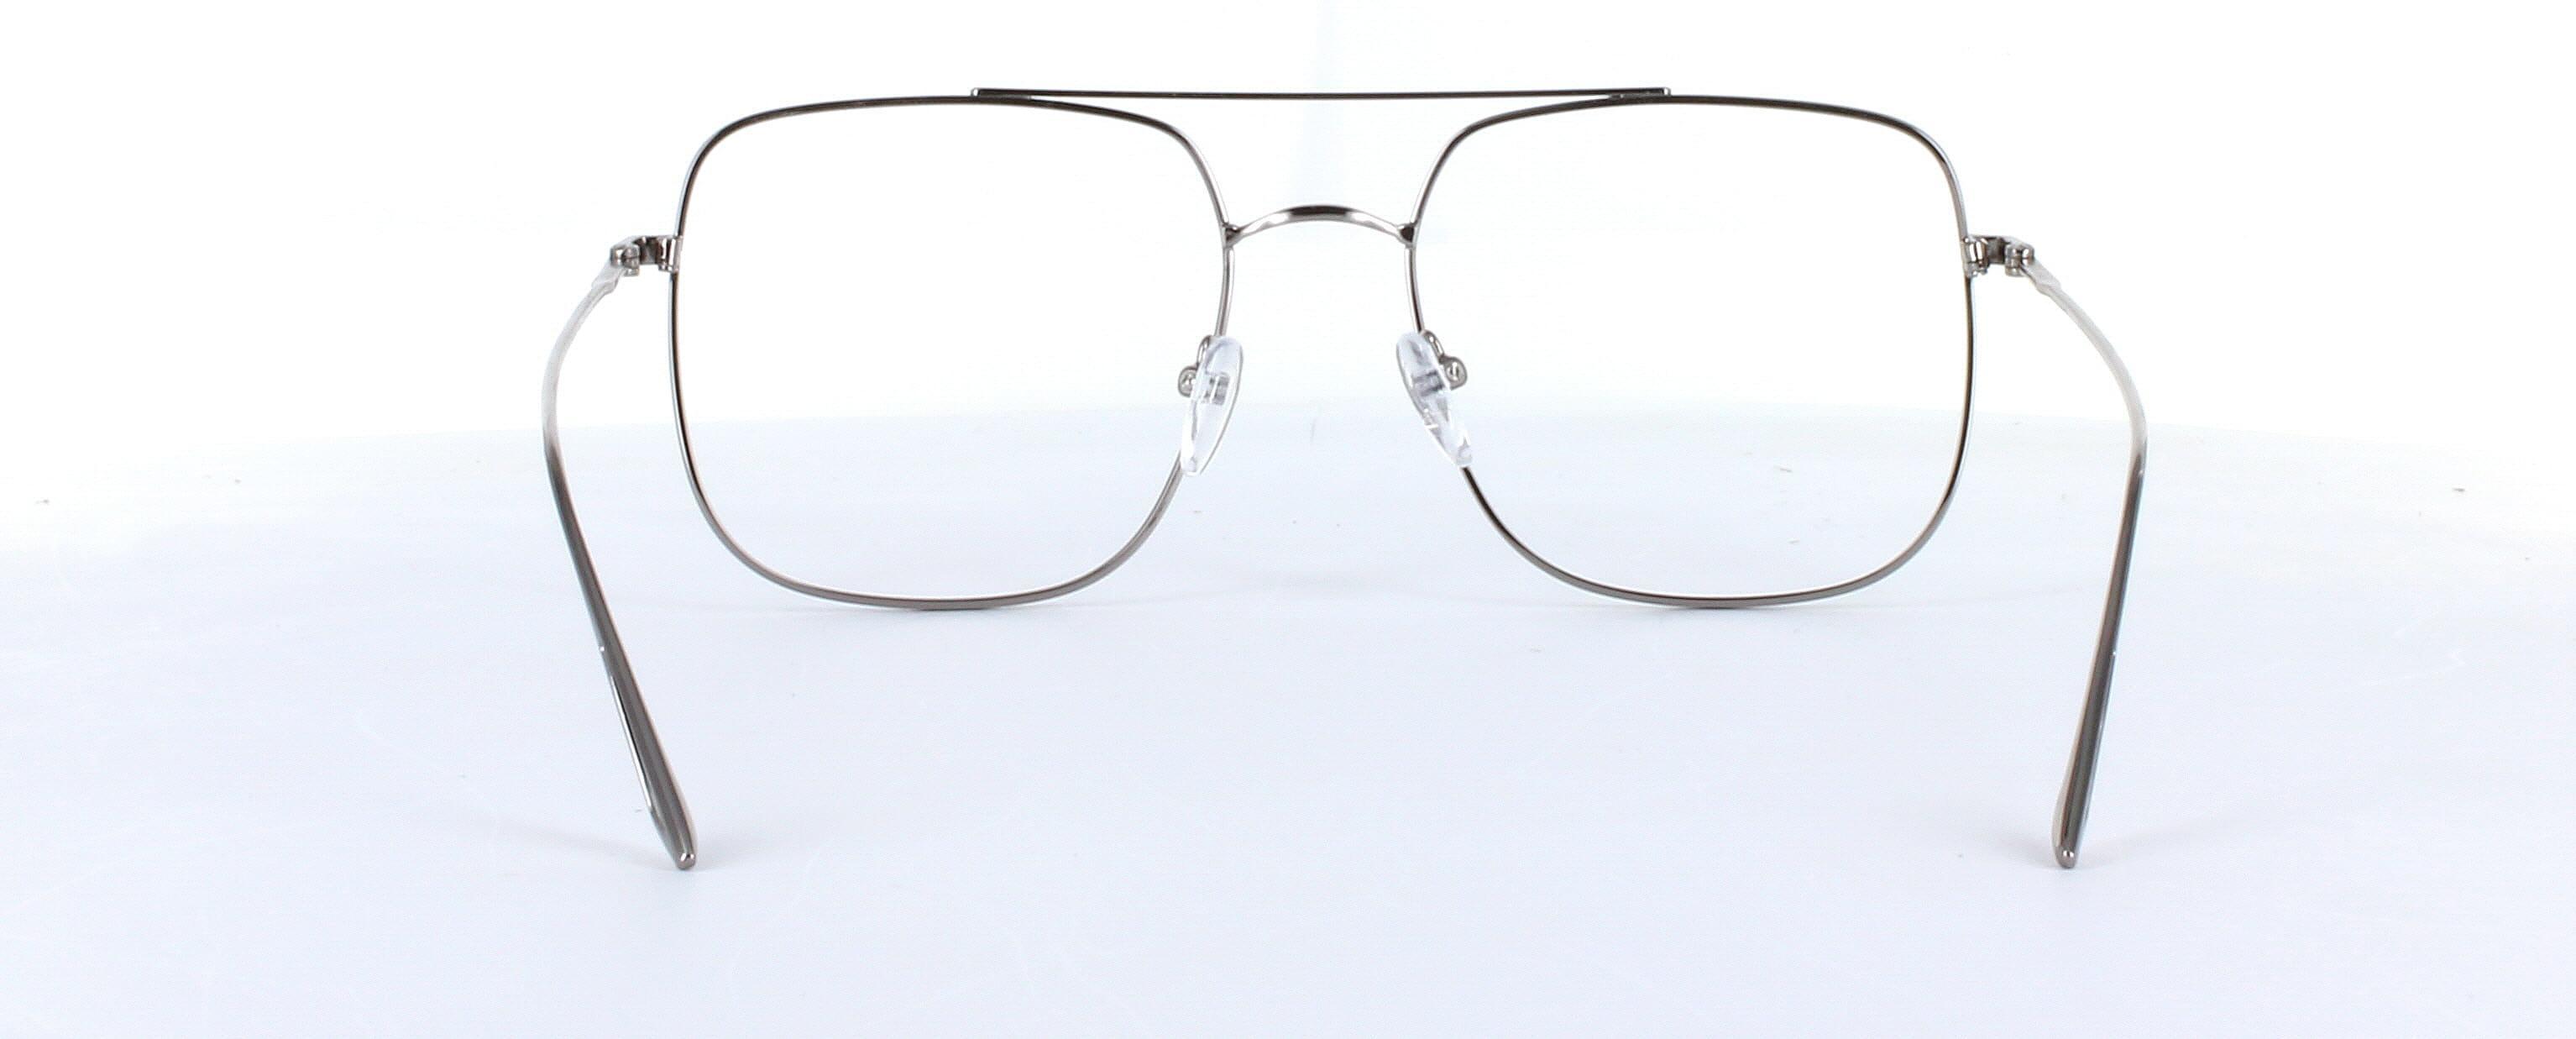 Eyecroxx 637-C1 Black Full Rim Aviator Metal Glasses - Image View 3